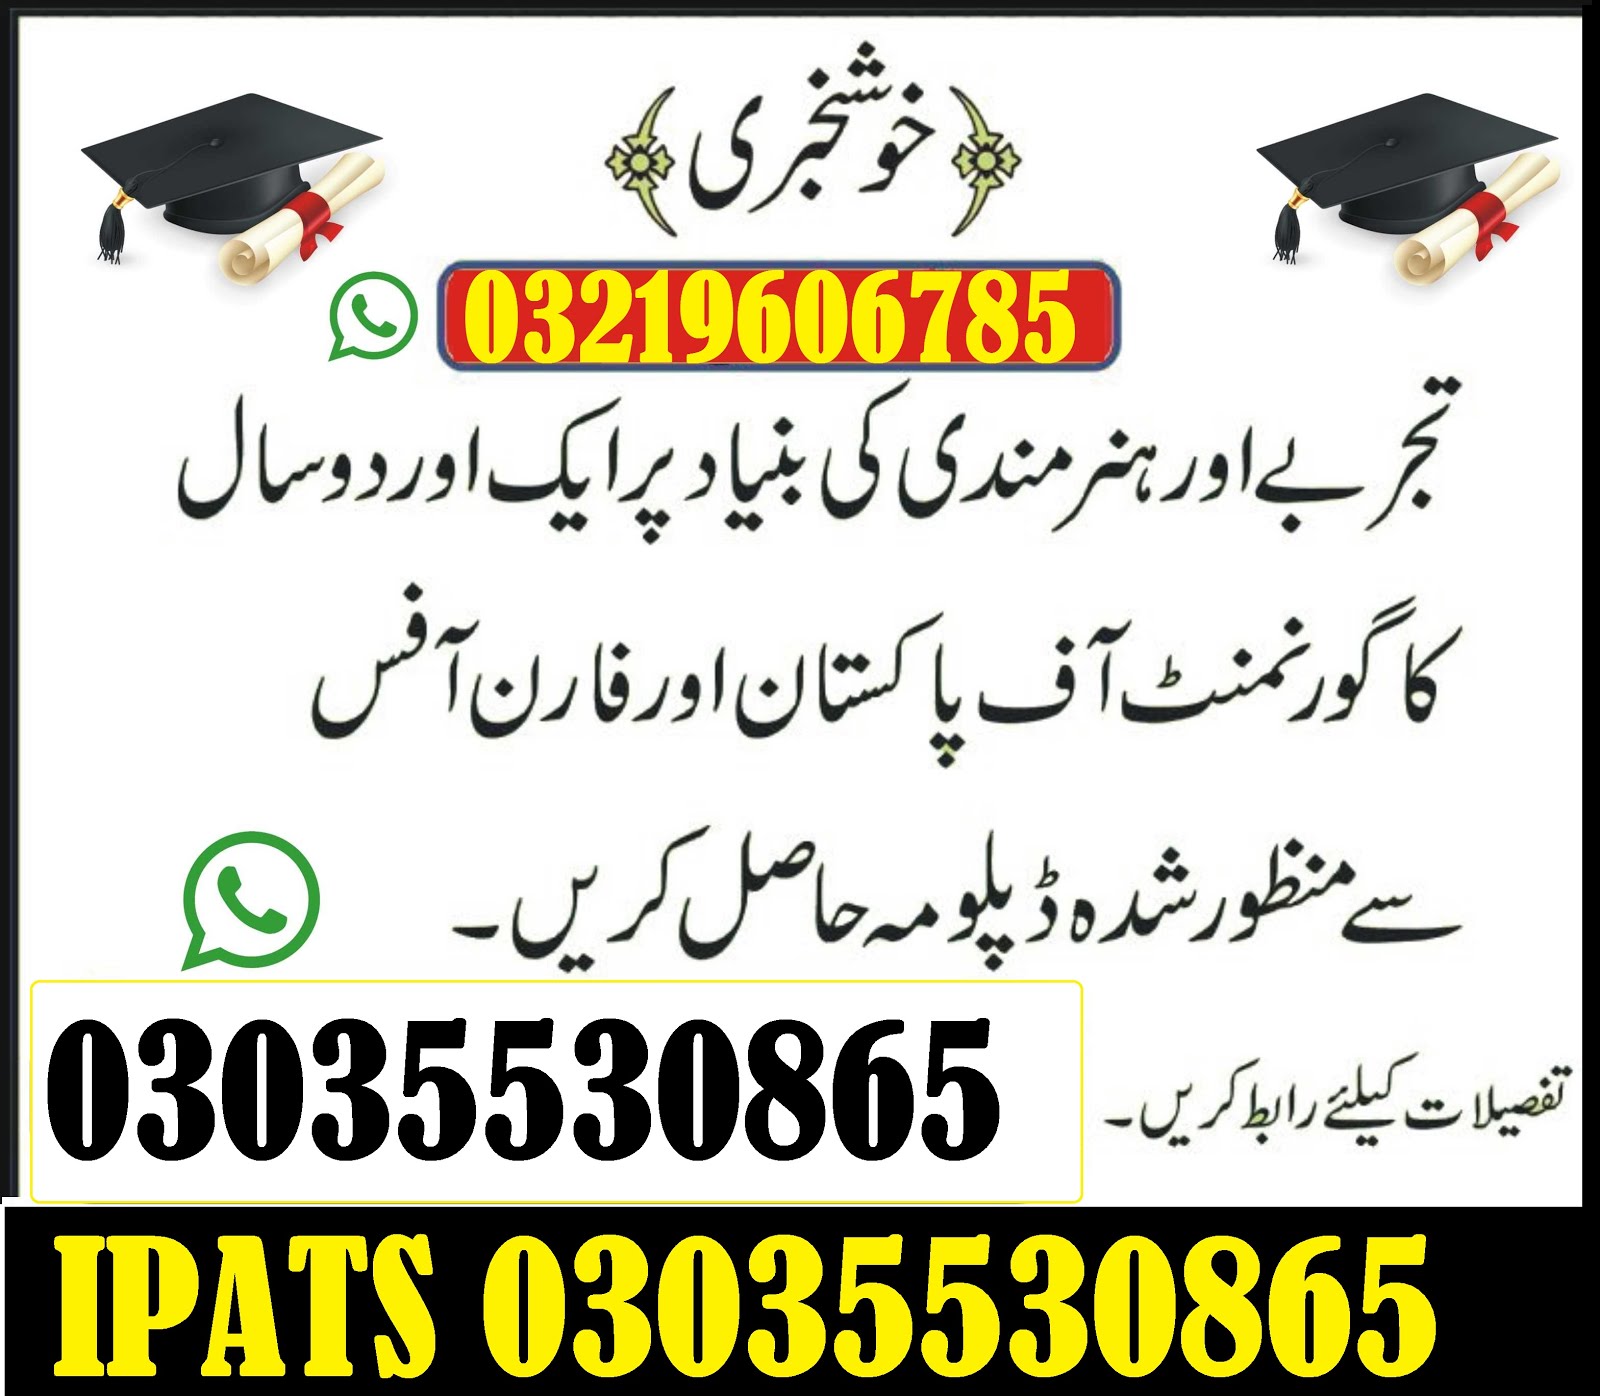 Experienced Based Civil Foreman Diploma in Rahimyar khan03219606785